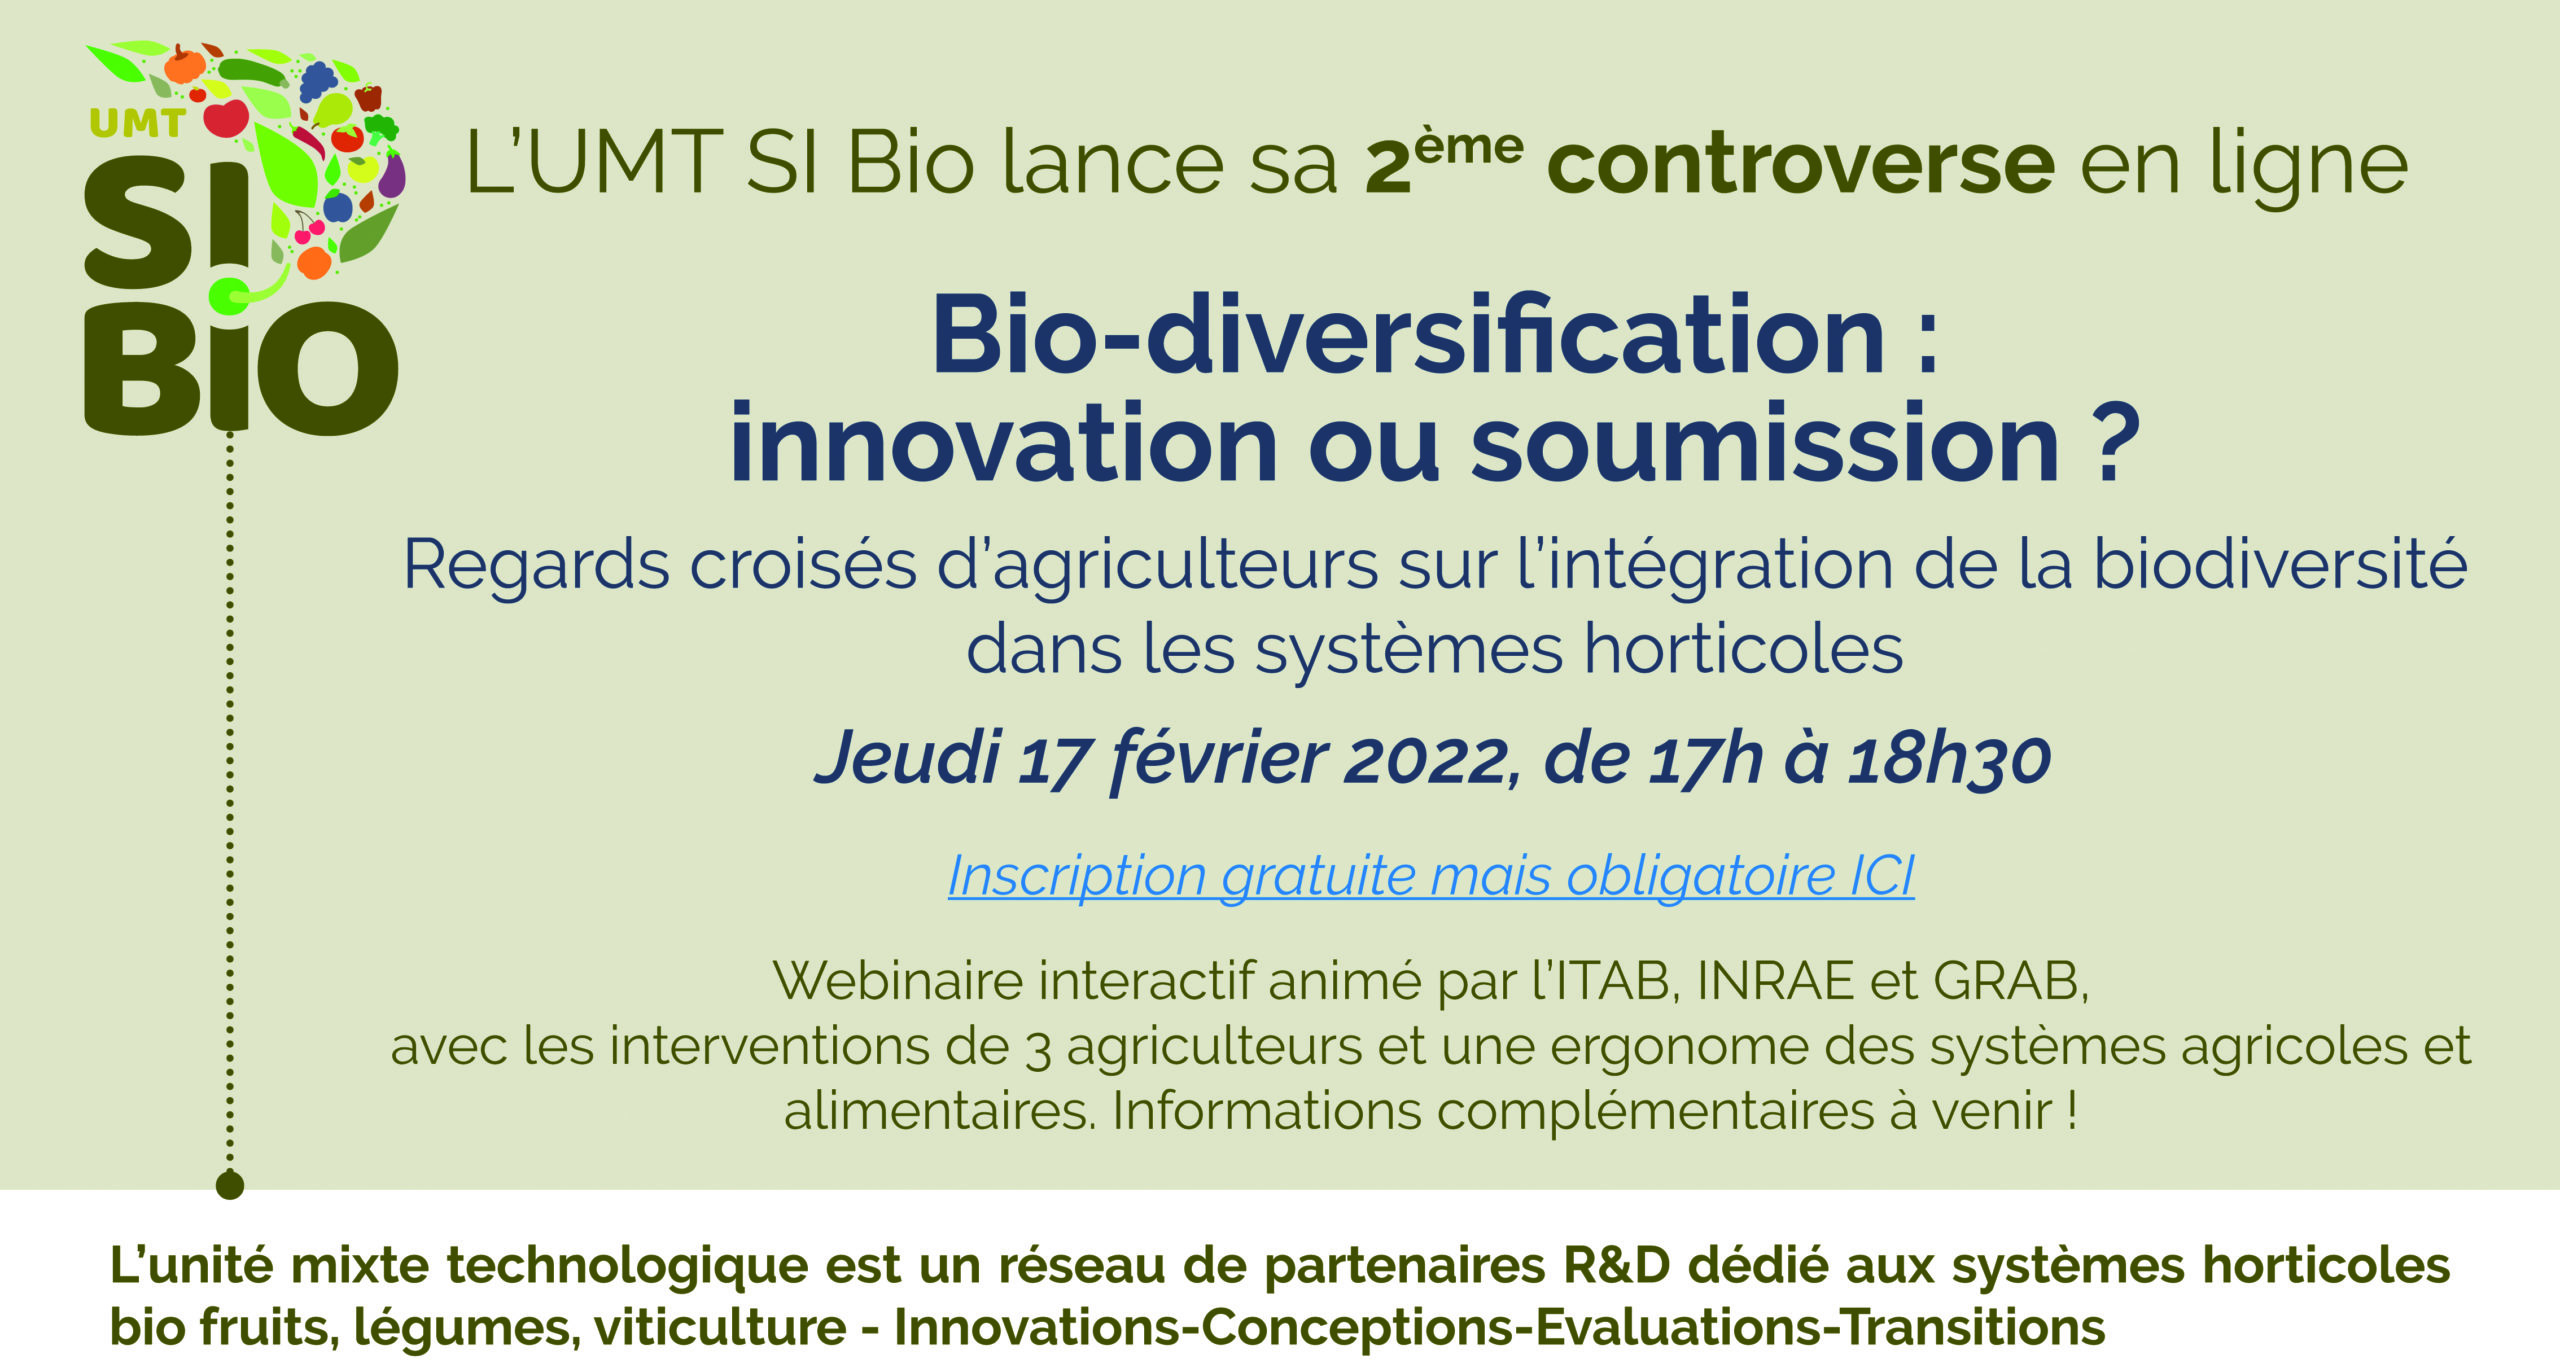 Biodiv: innovation ou soumission